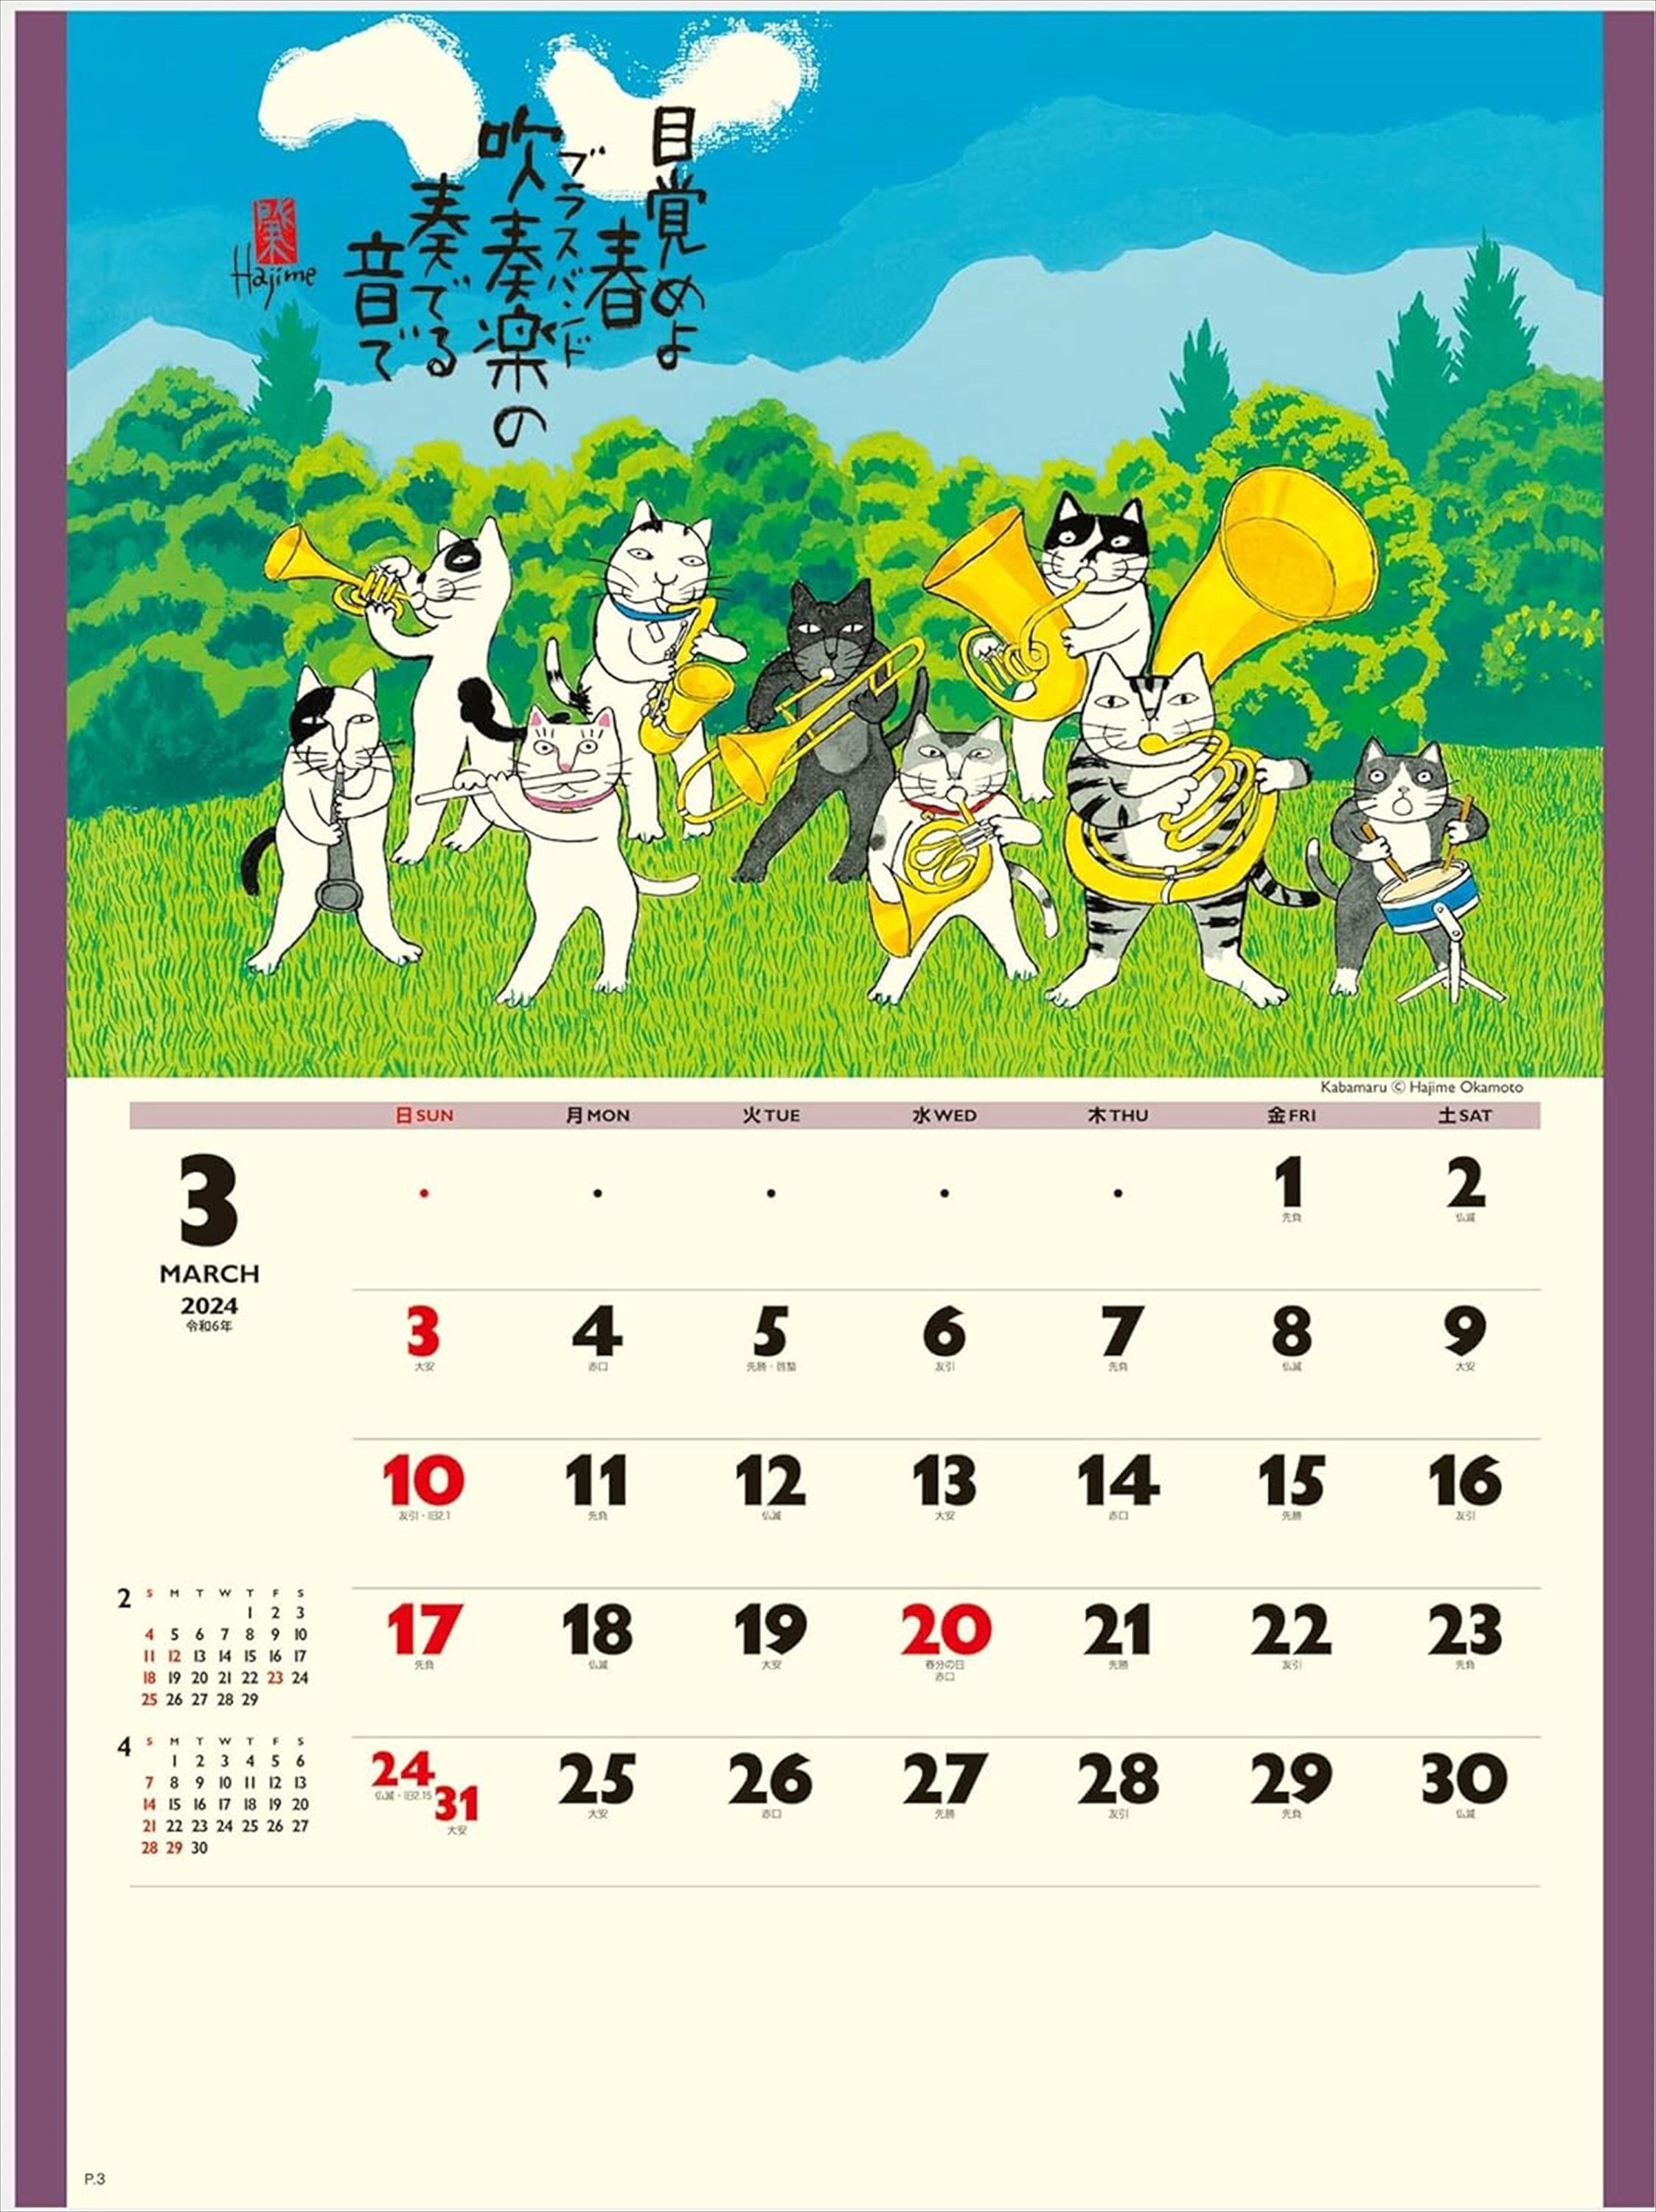 ON SALE My Hero Academia Saikyo Gasha Station Limited Edition Calendar  2023/2024